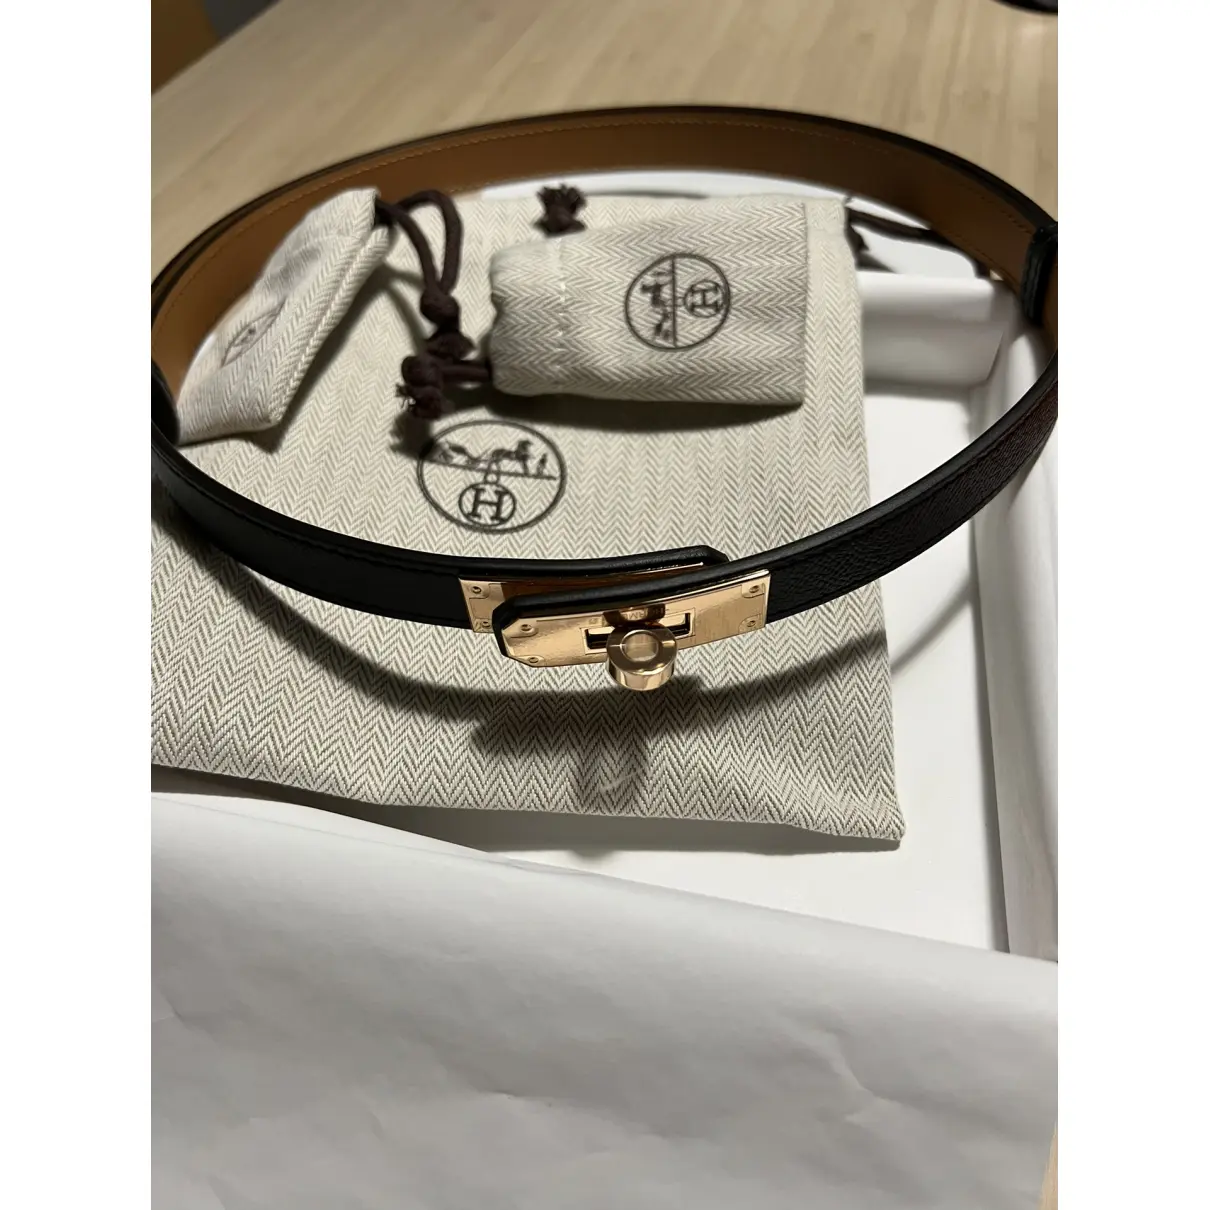 Buy Hermès Kelly leather belt online